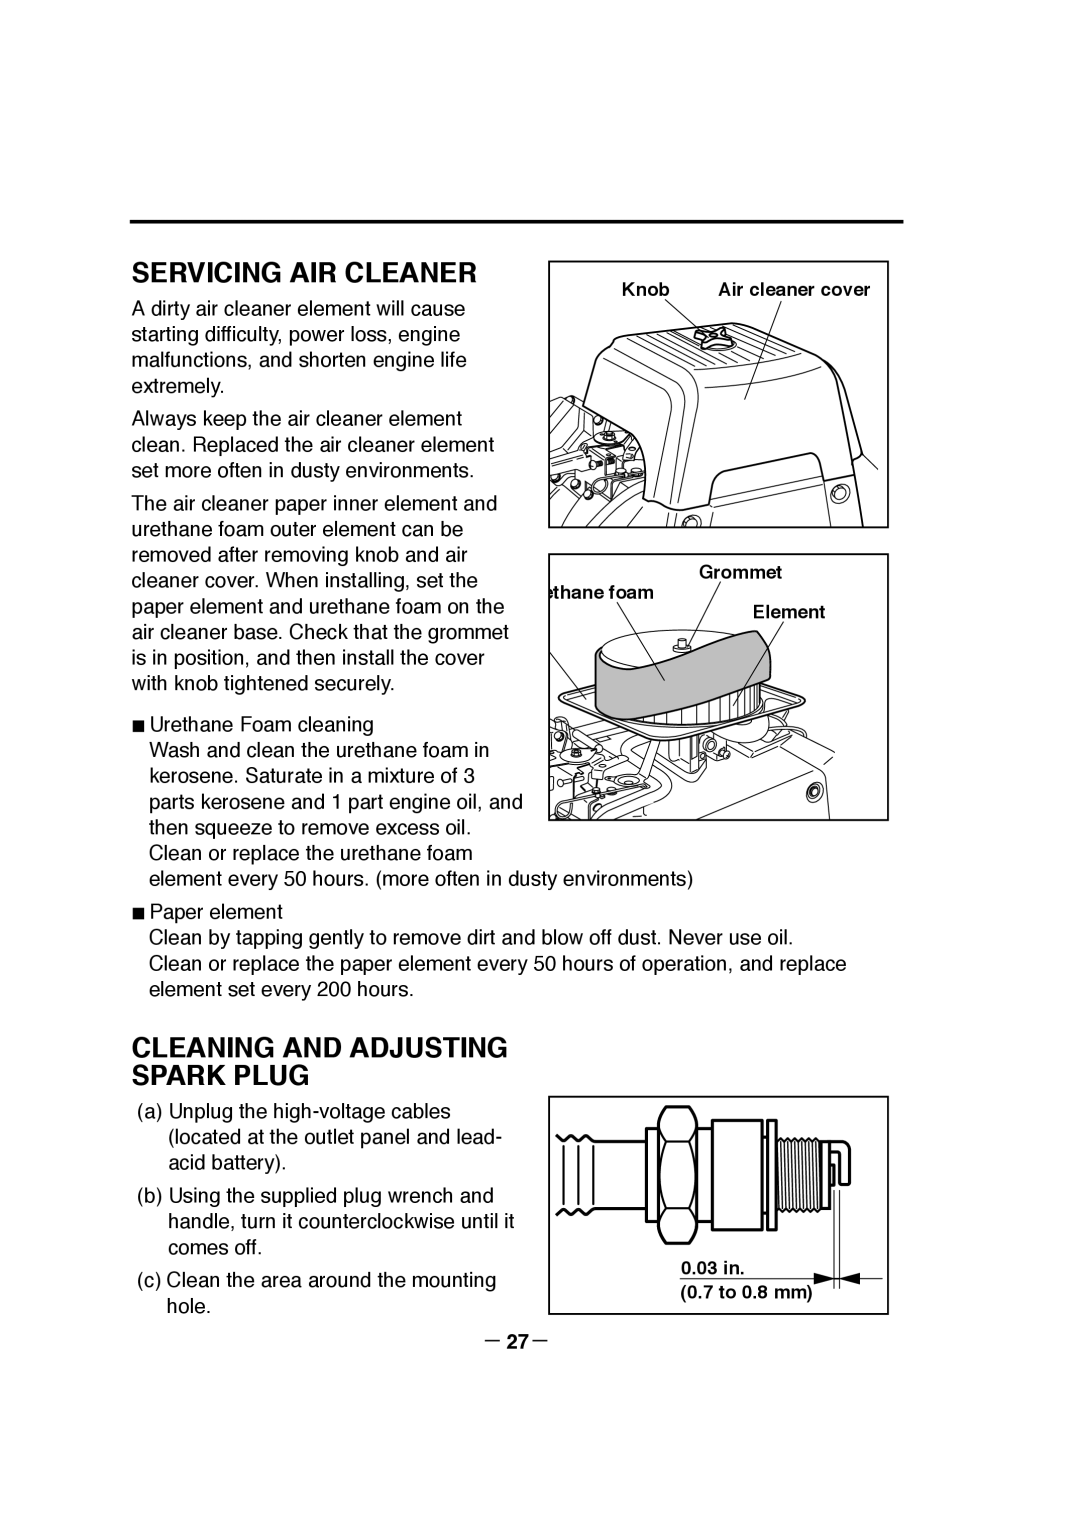 Makita G12010R manual Servicing Air Cleaner, Cleaning And Adjusting Spark Plug, － 27－ 